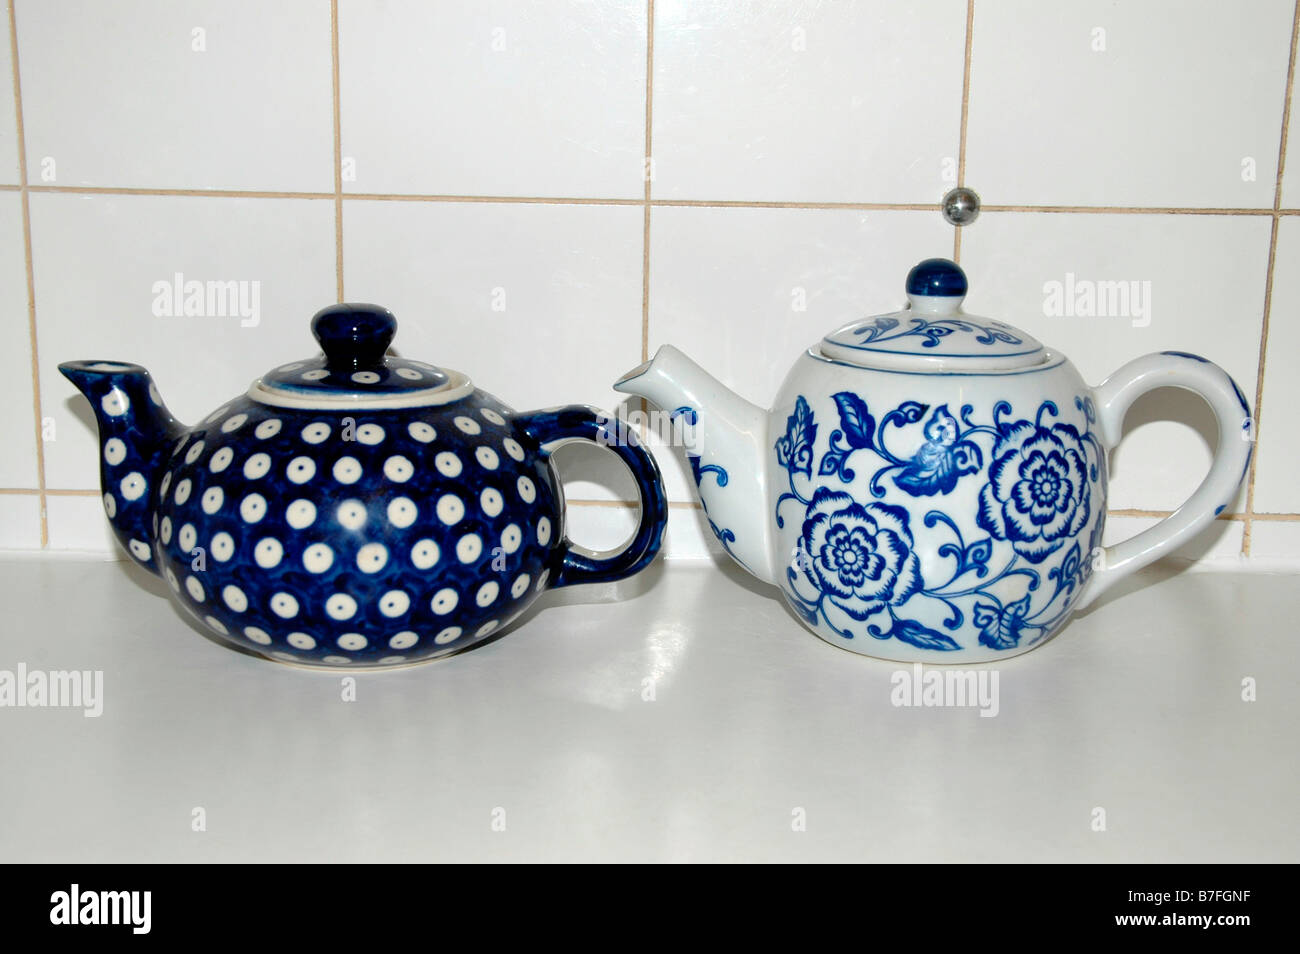 Two porcelain teapots sit on a kitchen ledge. Stock Photo